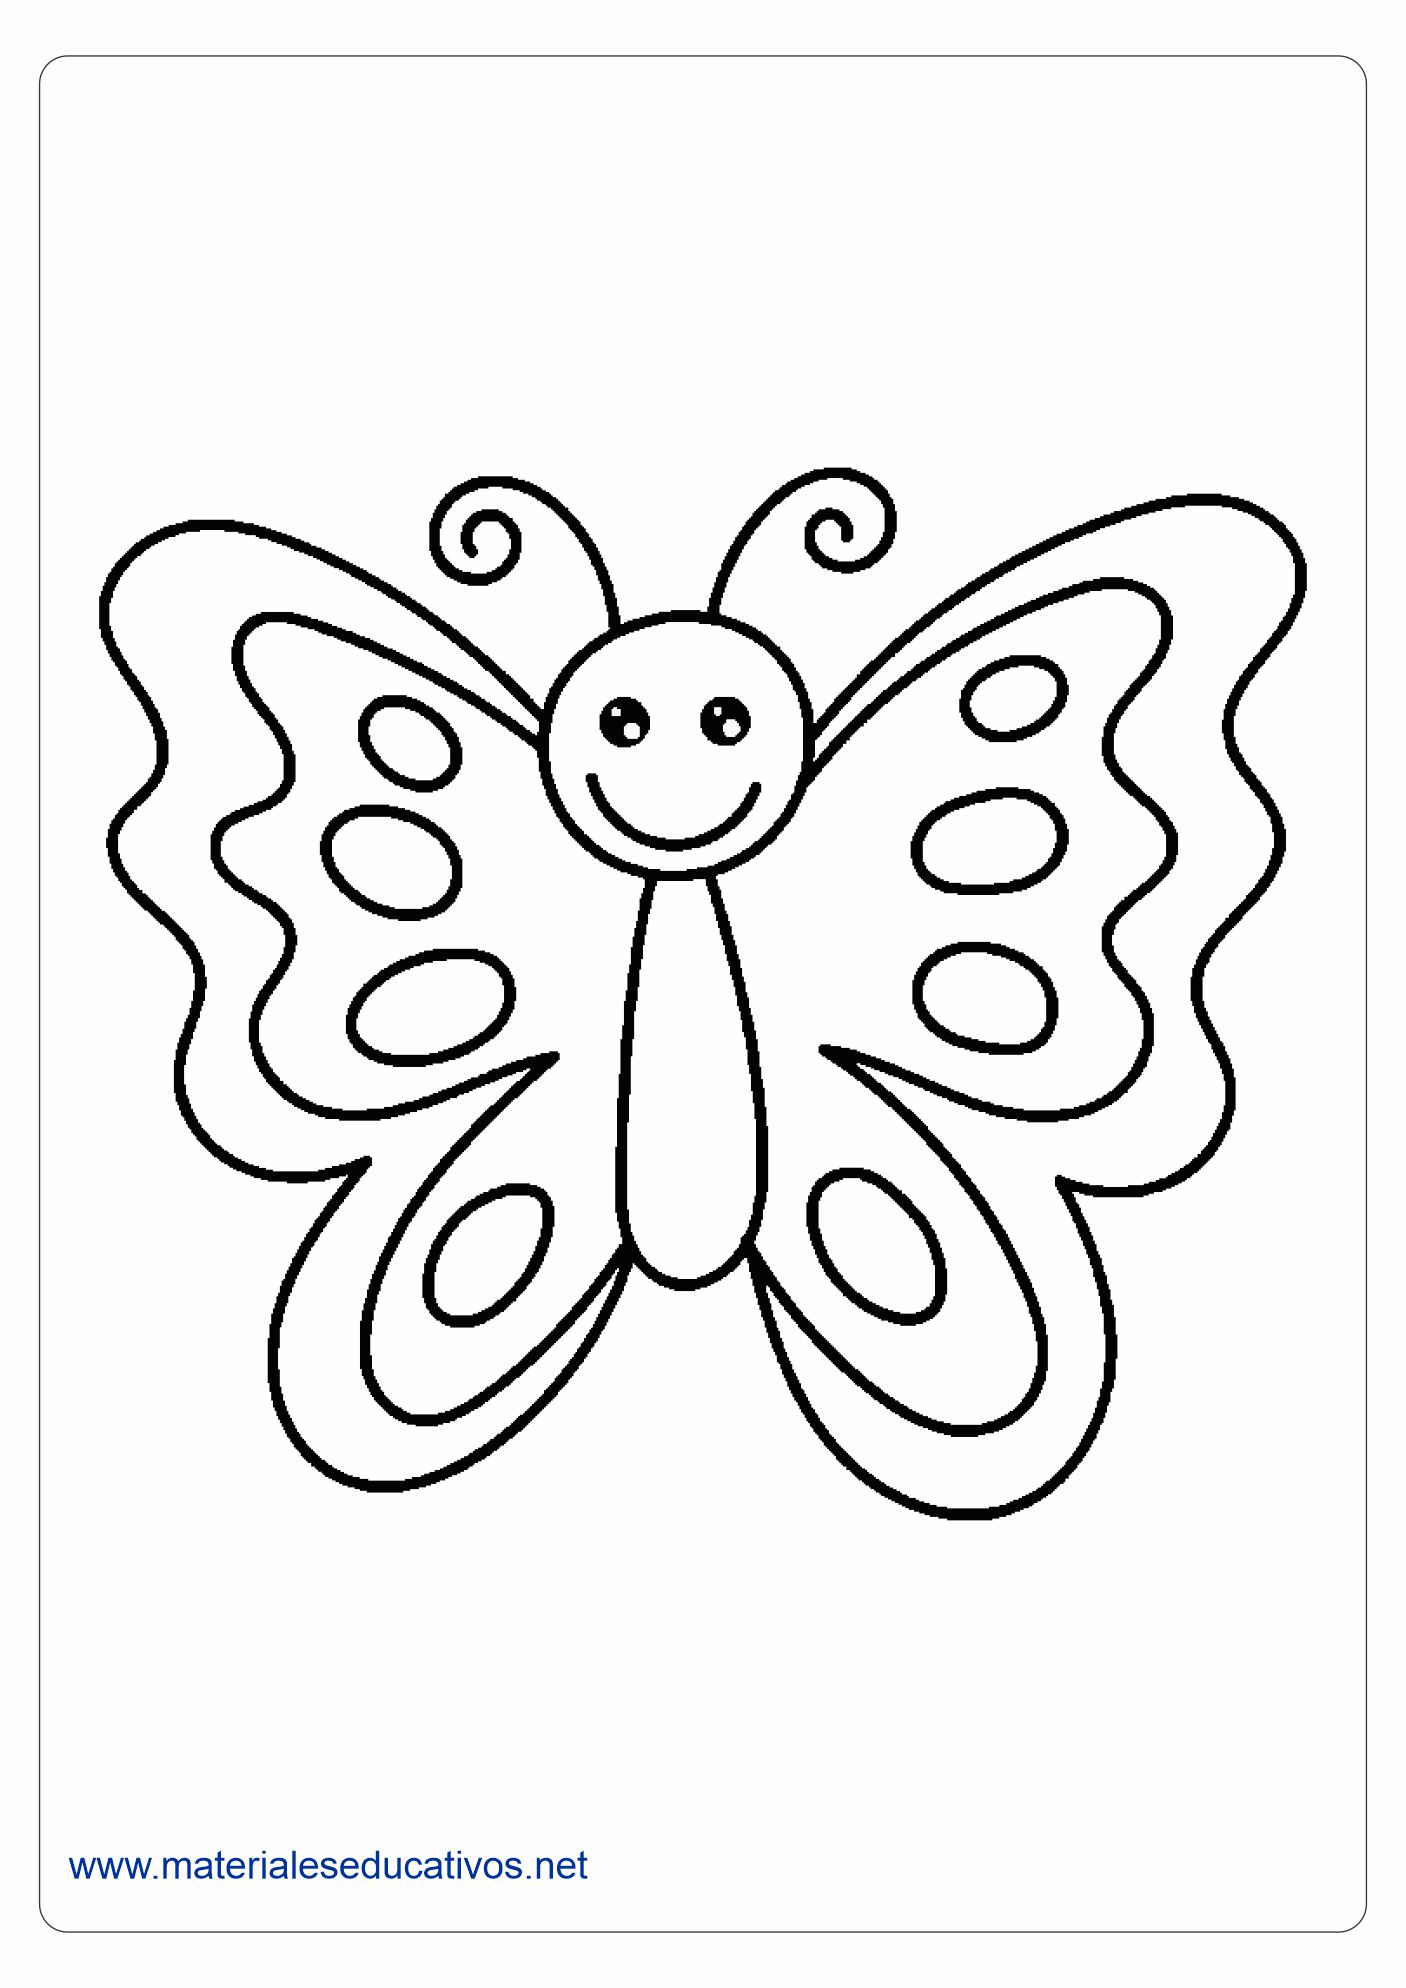 Mariposa раскраска для детей